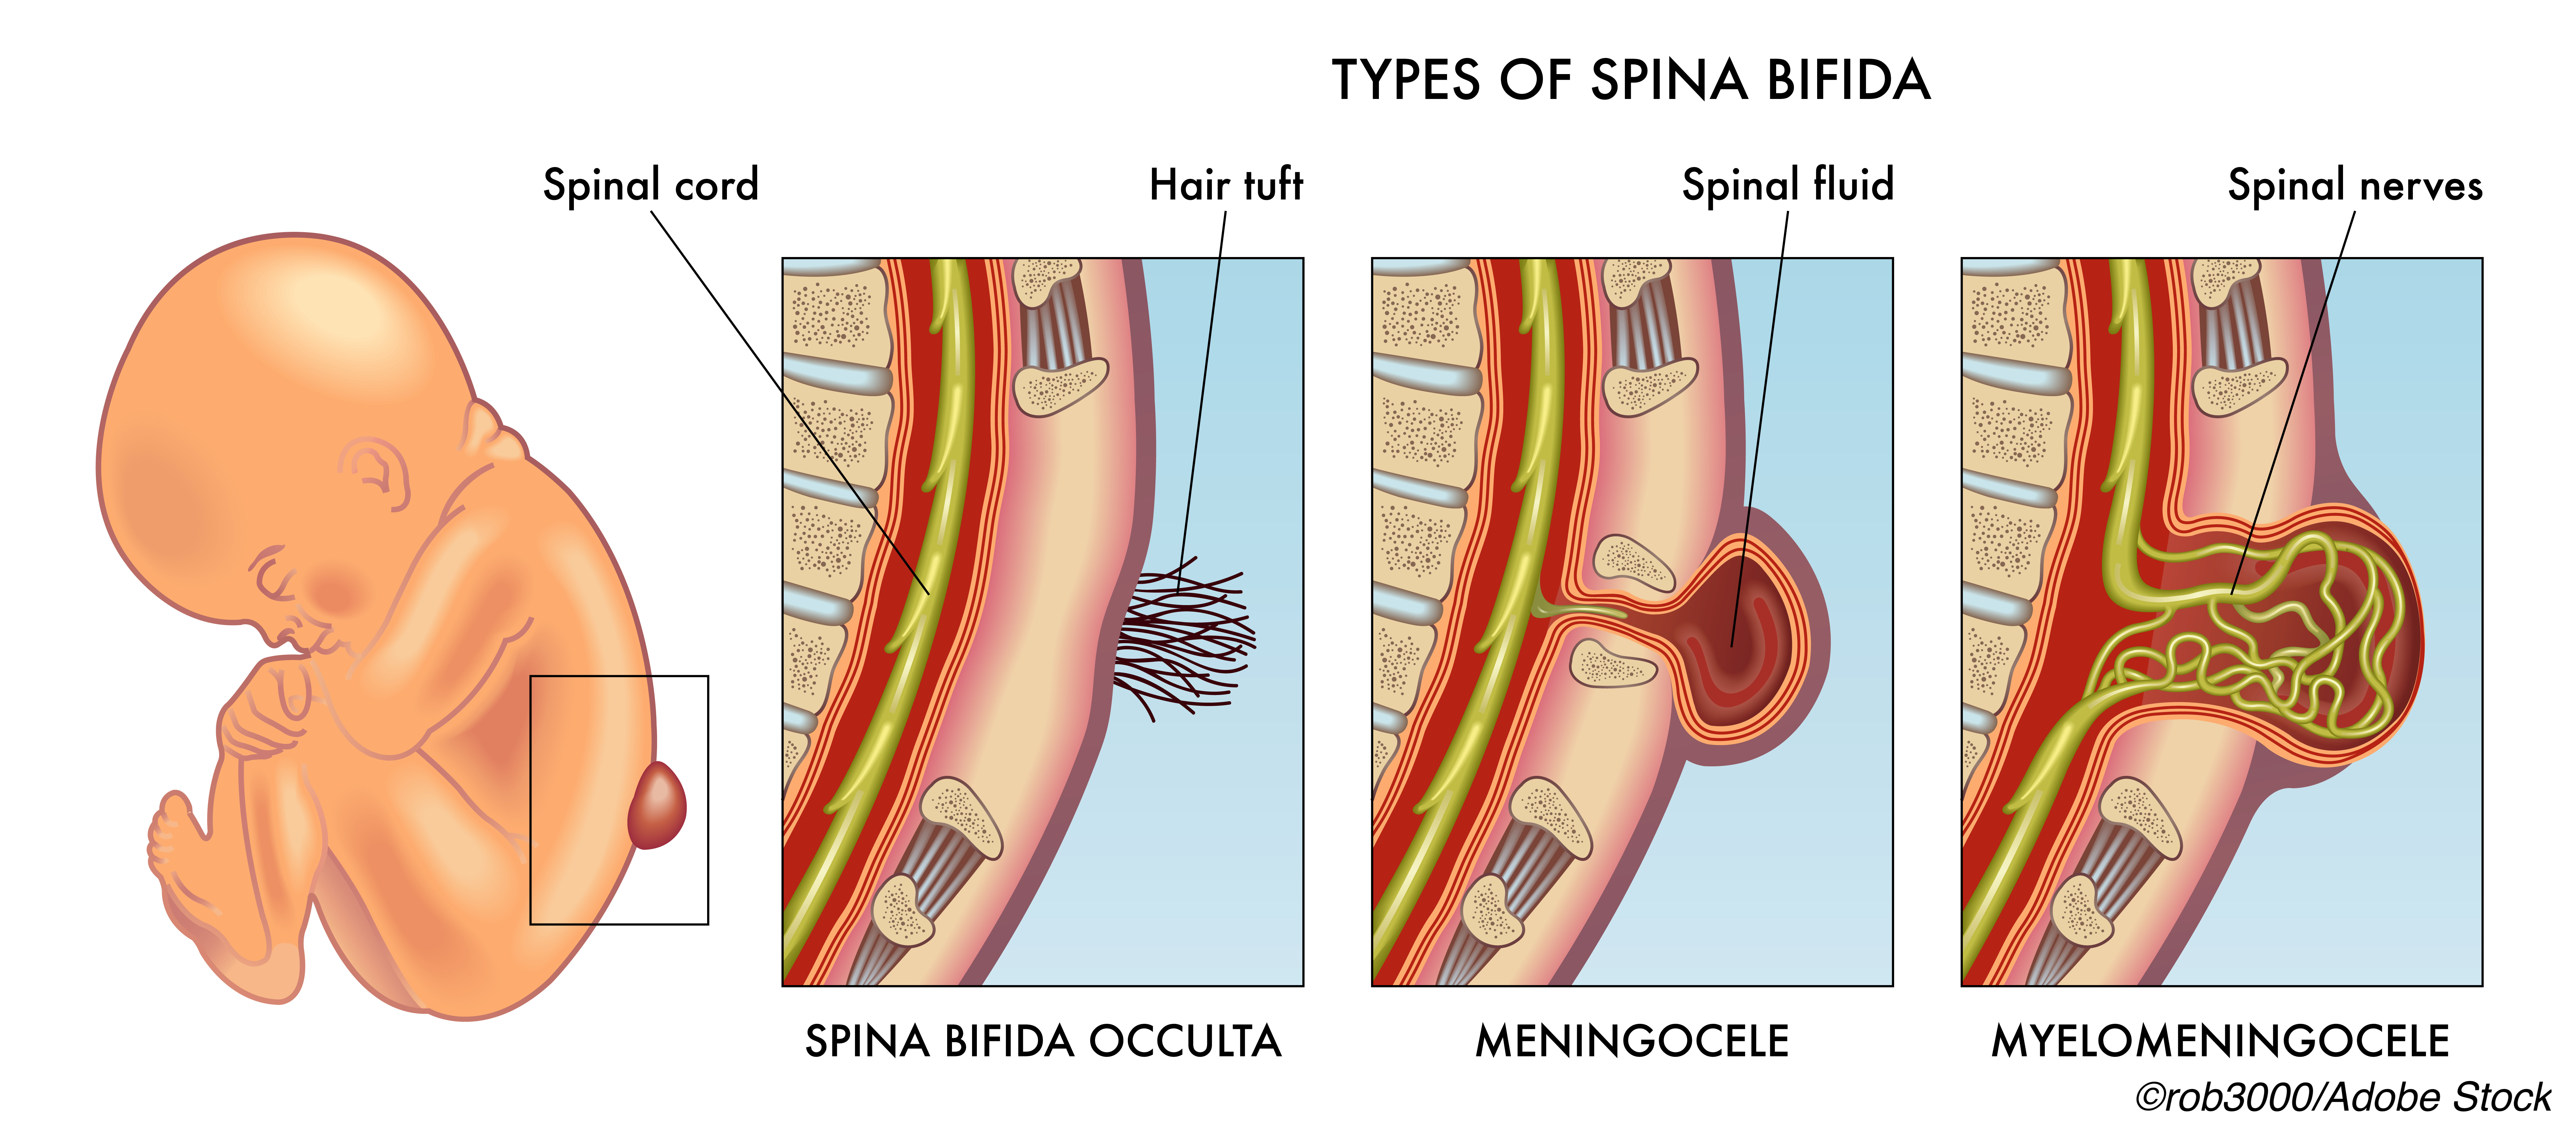 Spina Bifida Repair: The Sooner the Better